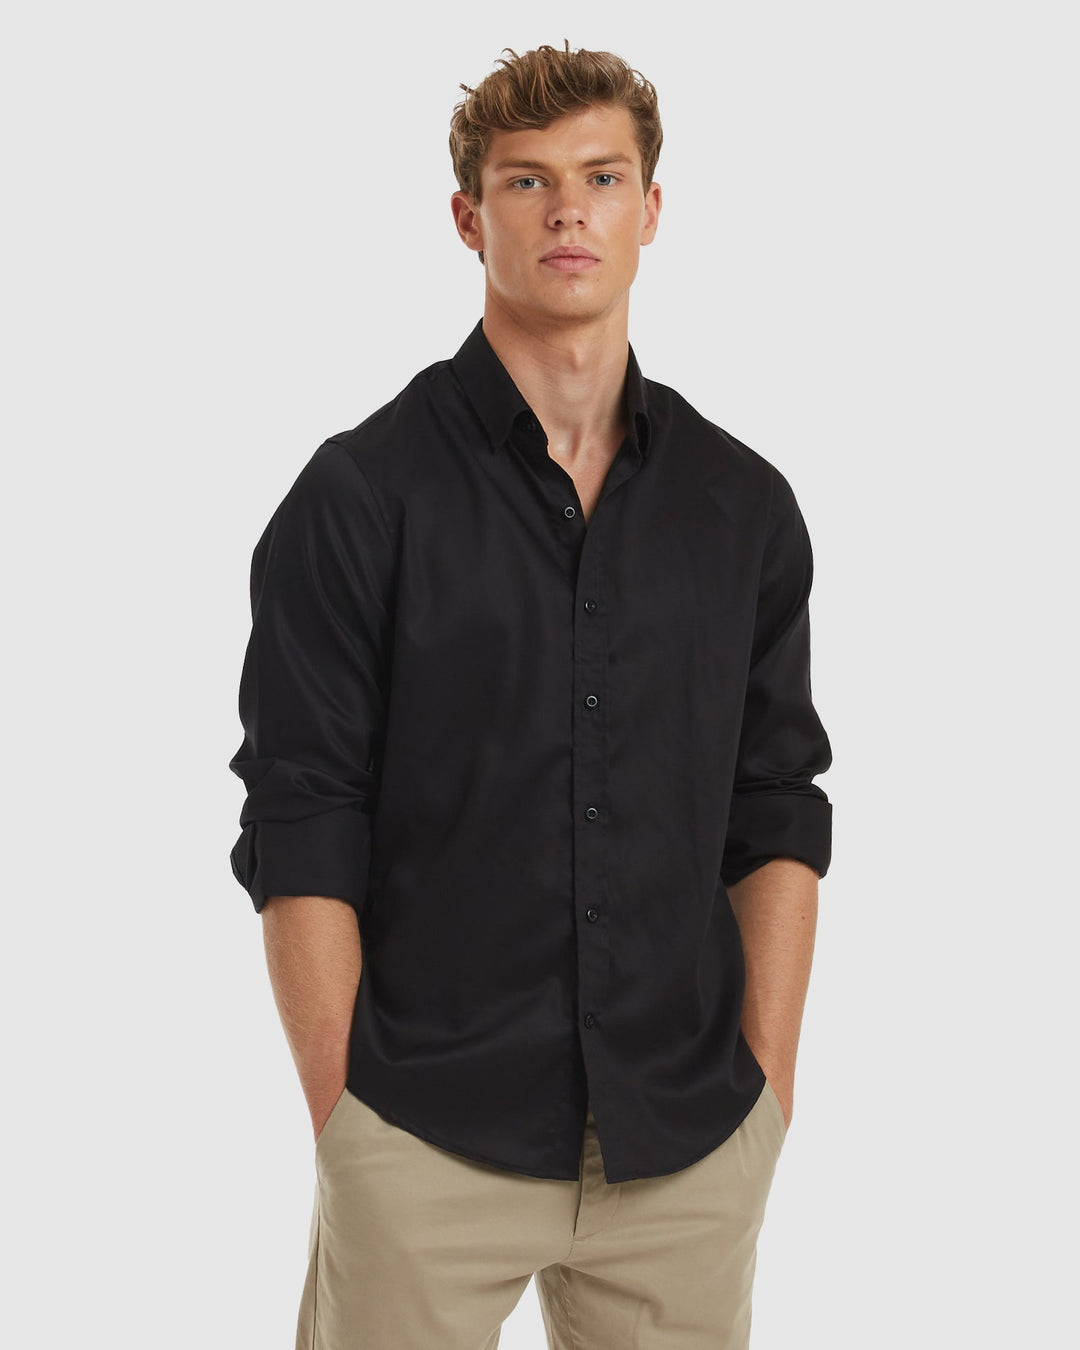 London Formal Black Shirt  - Non Iron Slim Fit